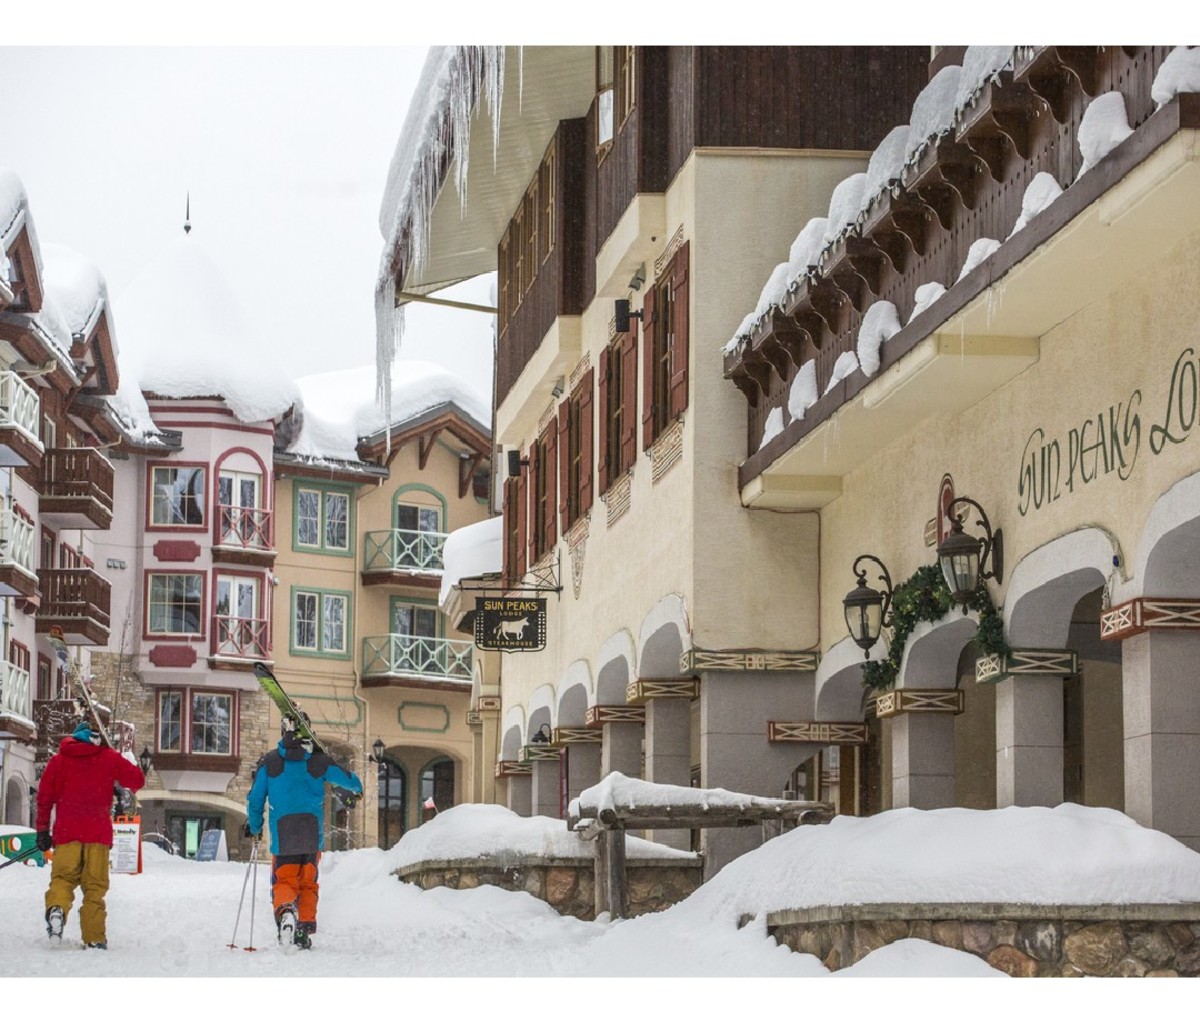 Skiiers walking through the village at Sun Peaks Resort